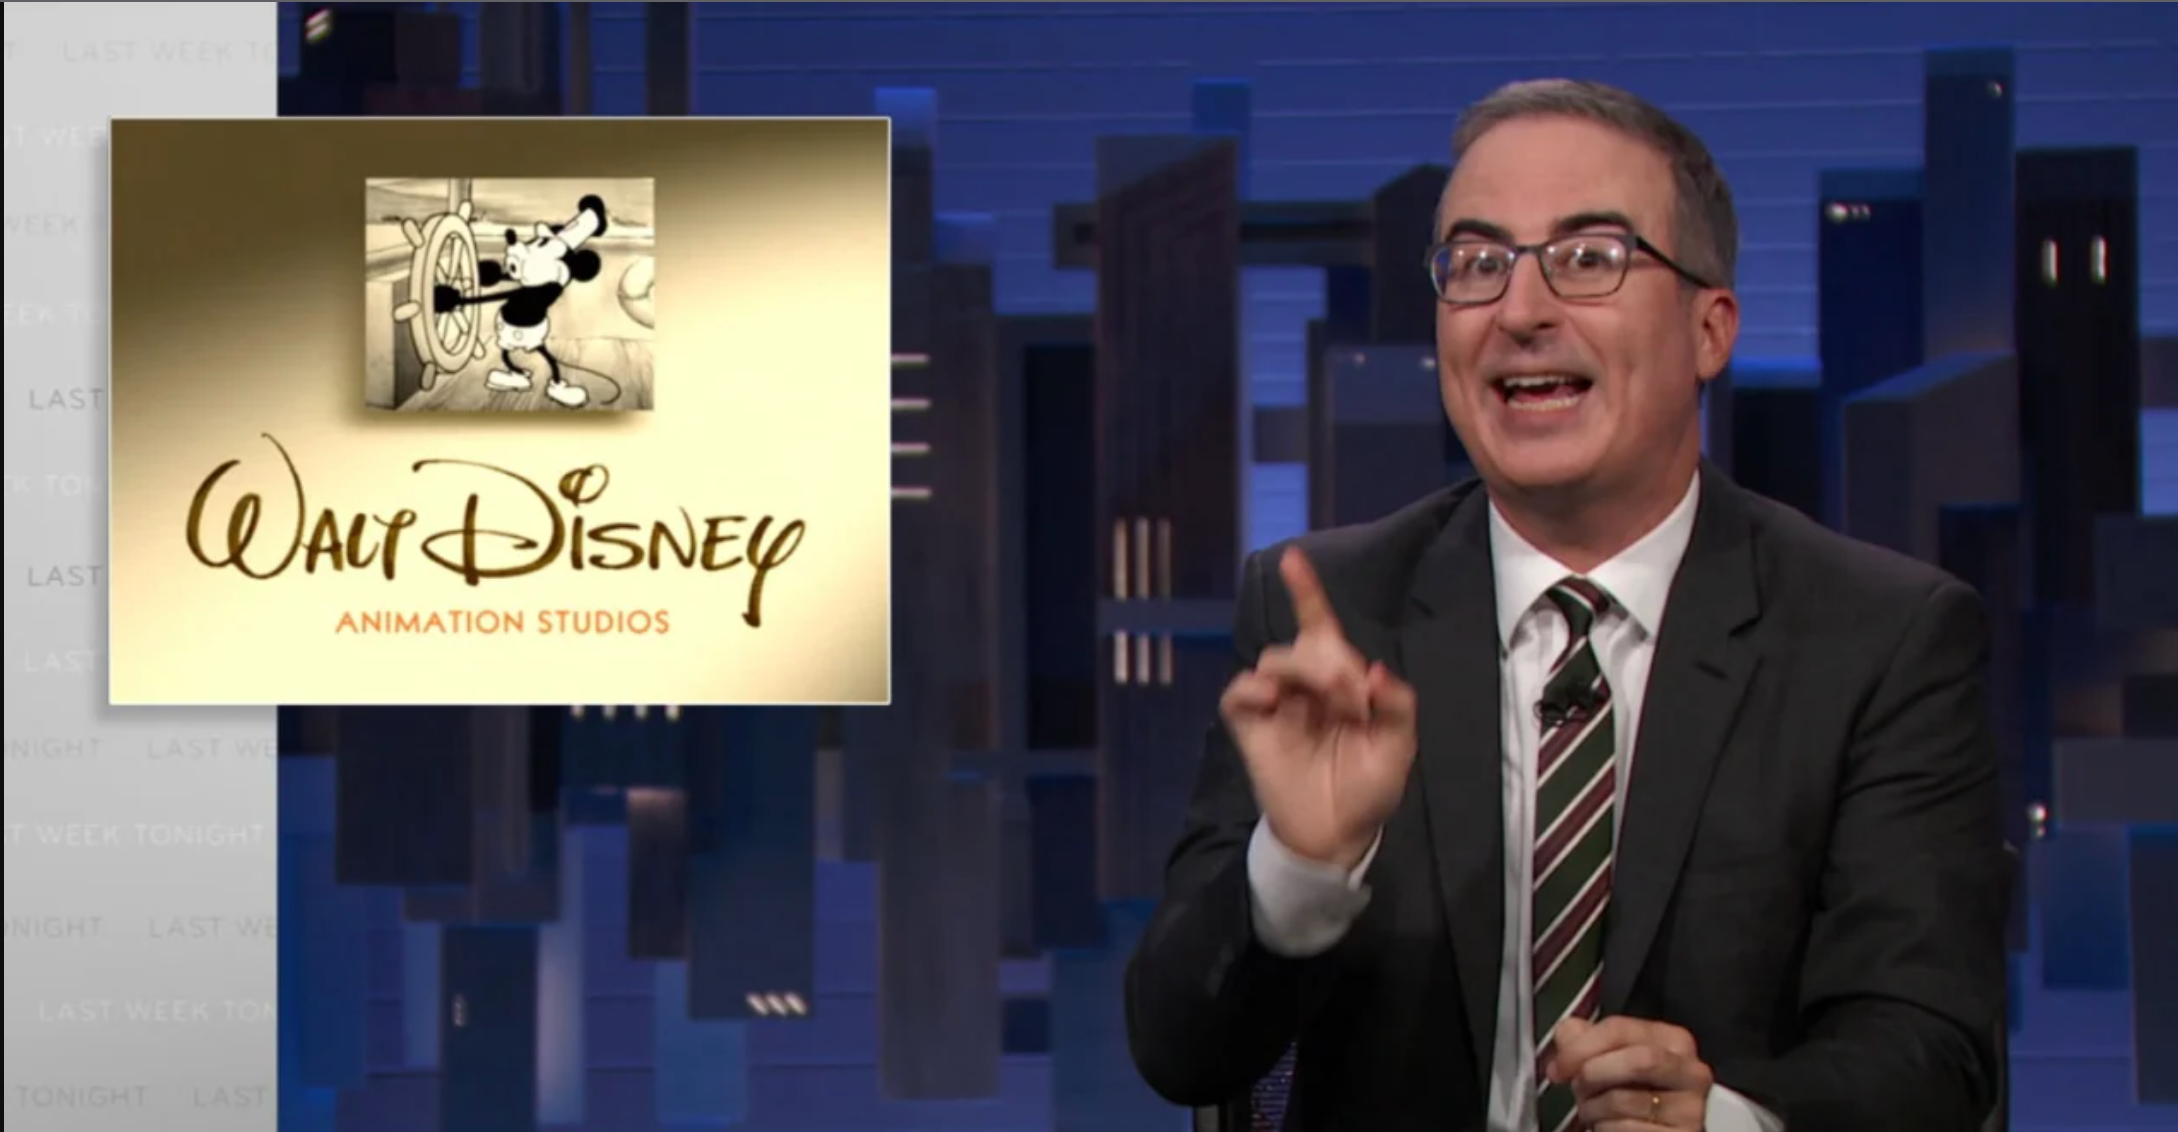 John Oliver riskily taunts Disney on ‘Last Week Tonight’